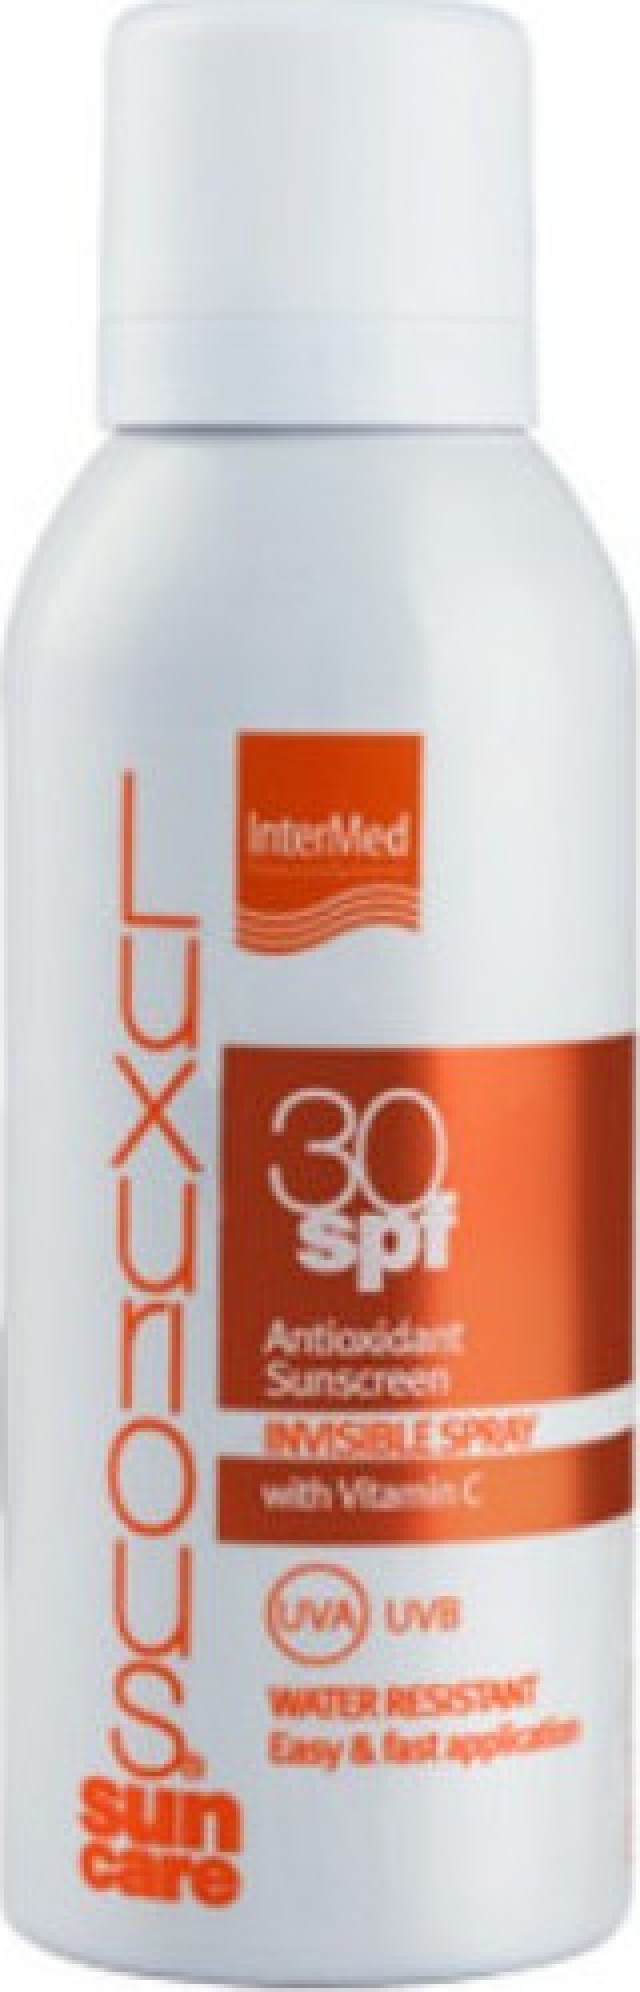 Intermed Luxurious Sun Care Invisible Spray Antioxidant Sunscreen SPF30 100ml